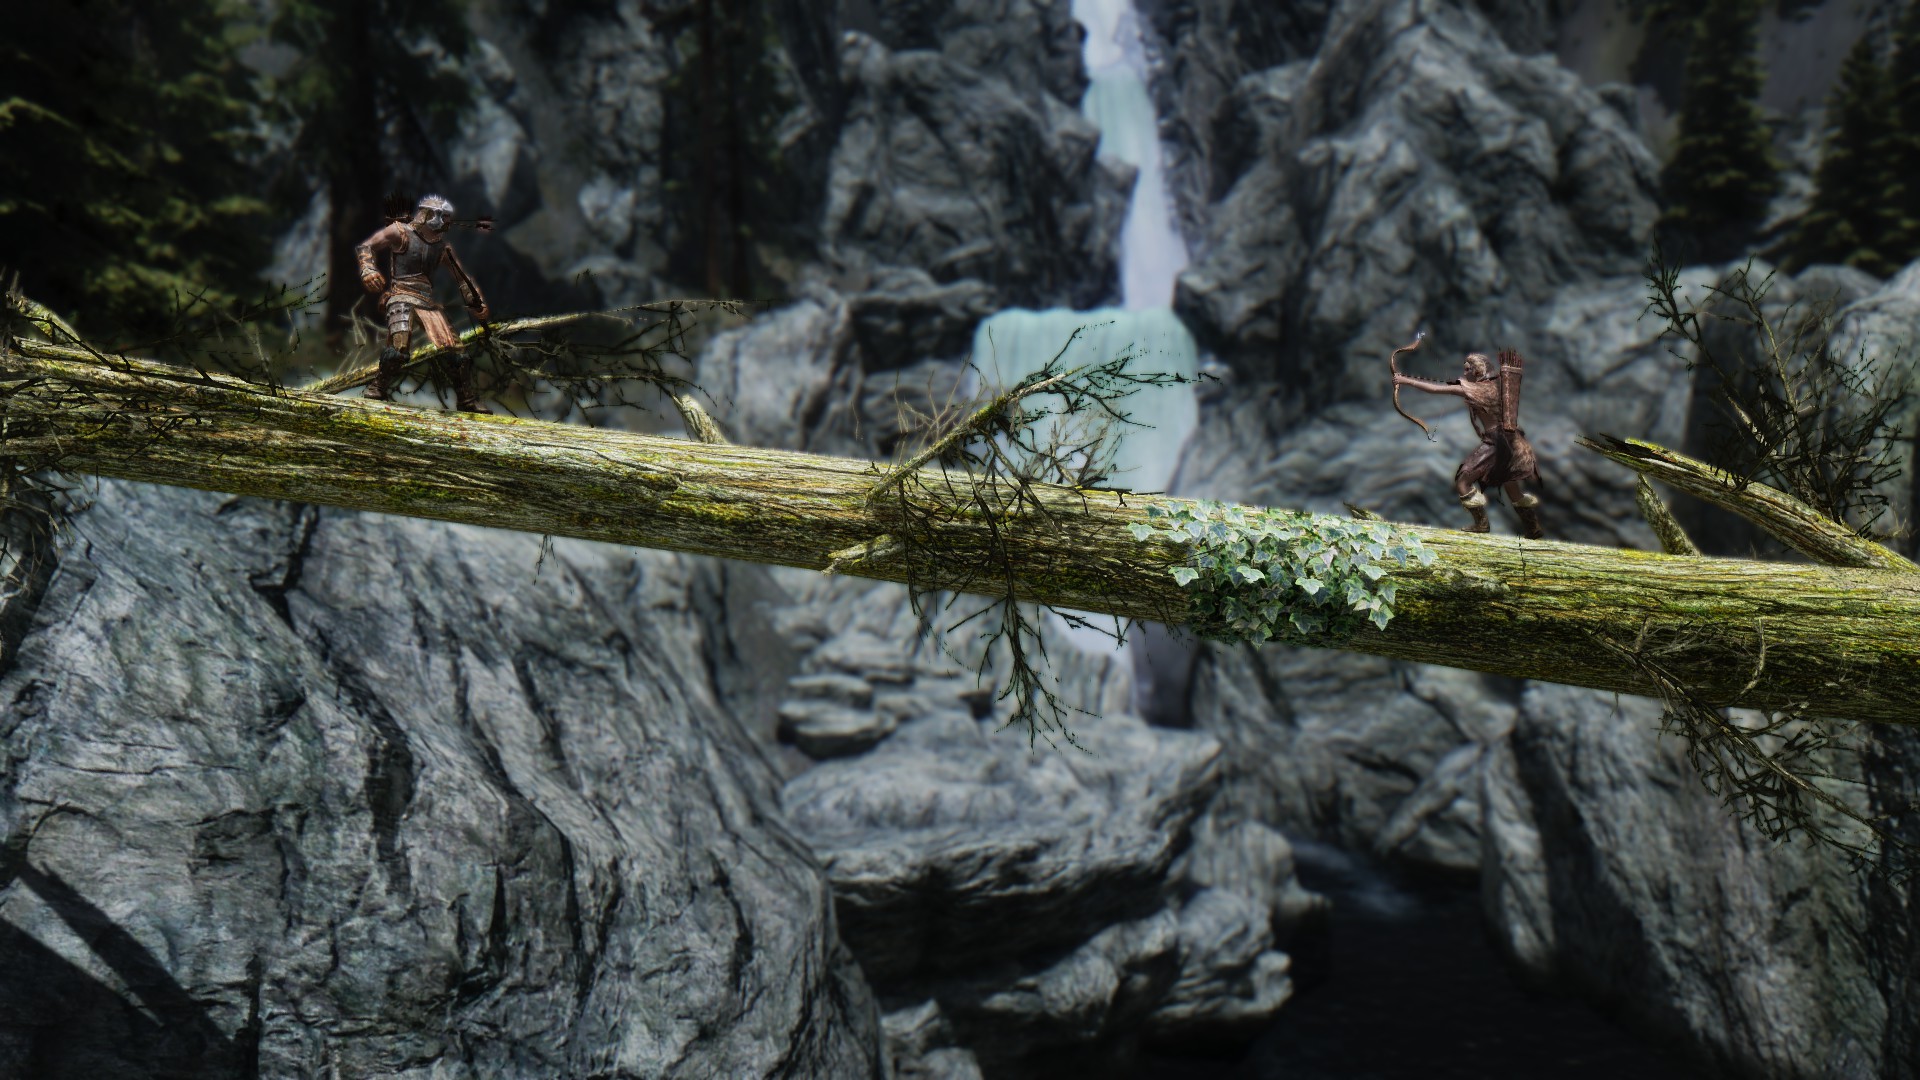 I had an archery battle on a fallen tree today. : skyrim